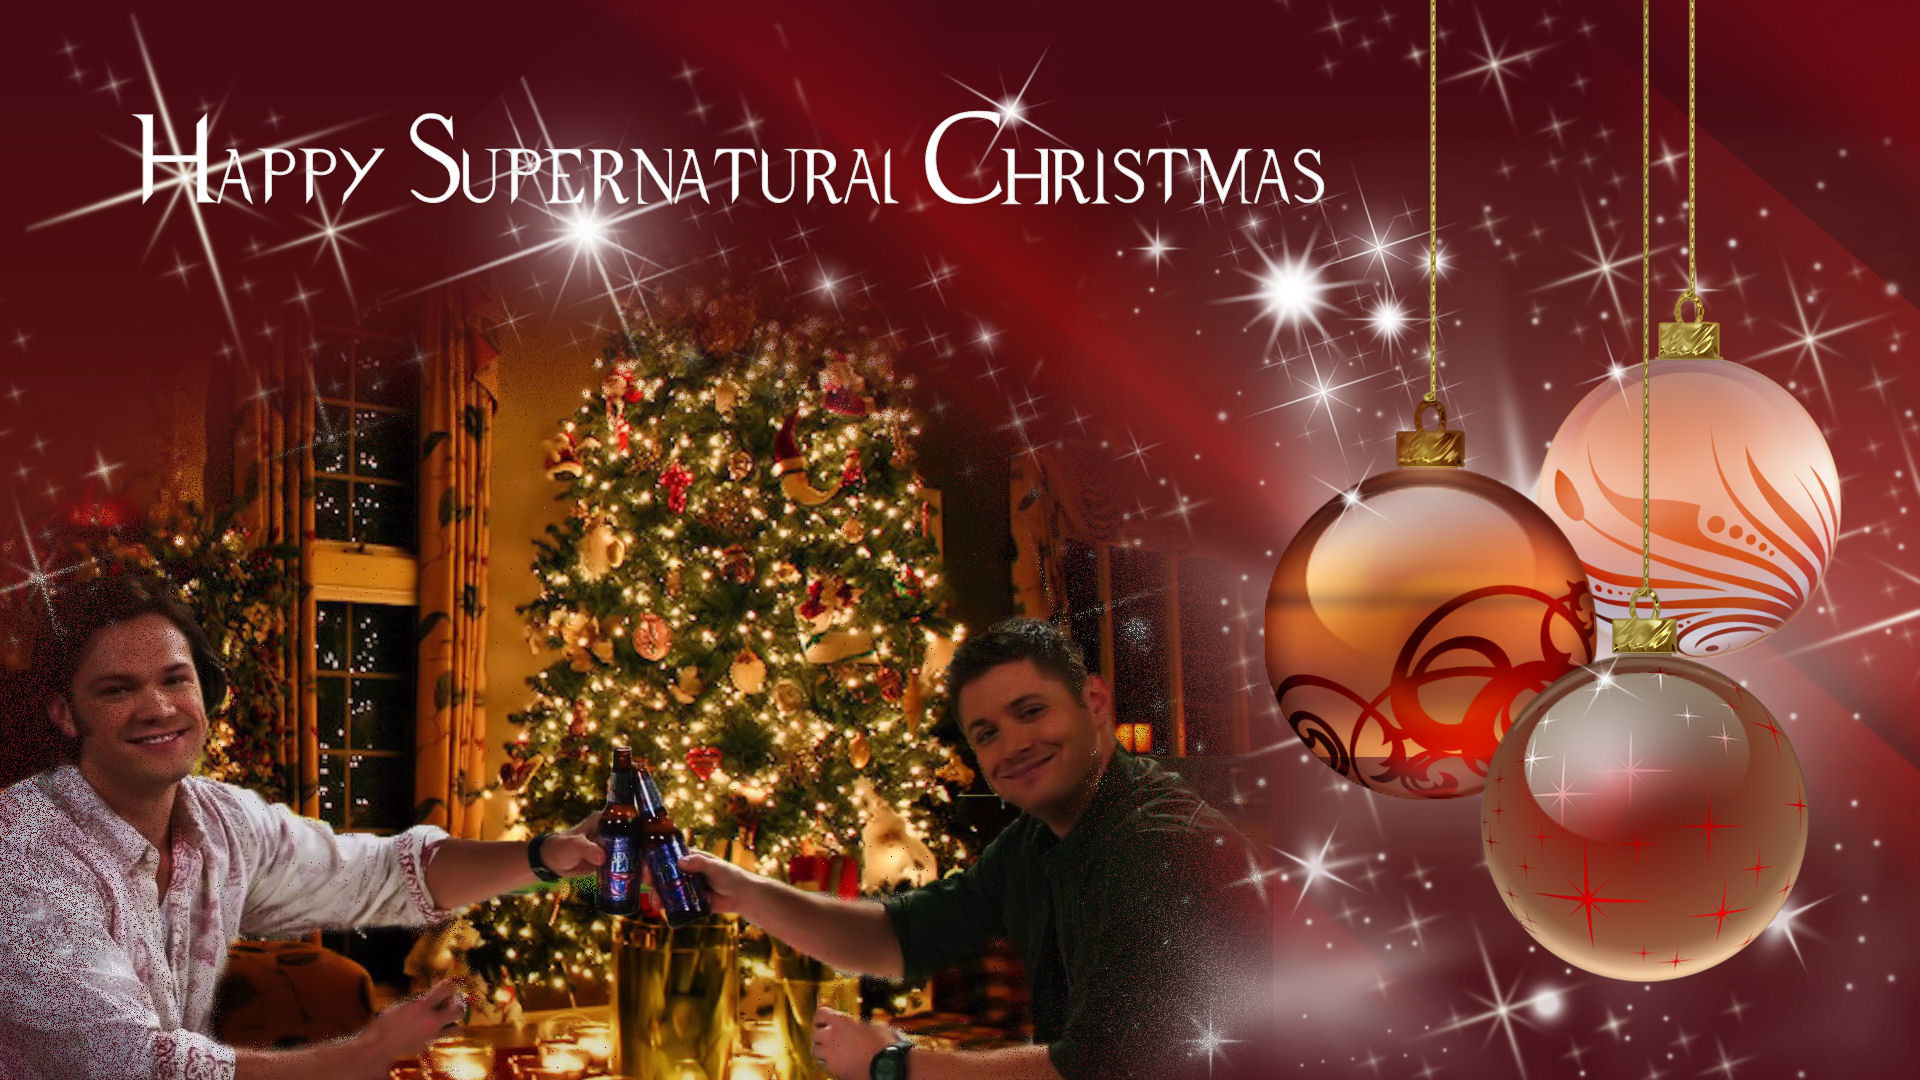 Supernatural Christmas – Supernatural Wallpaper 27992536 – Fanpop